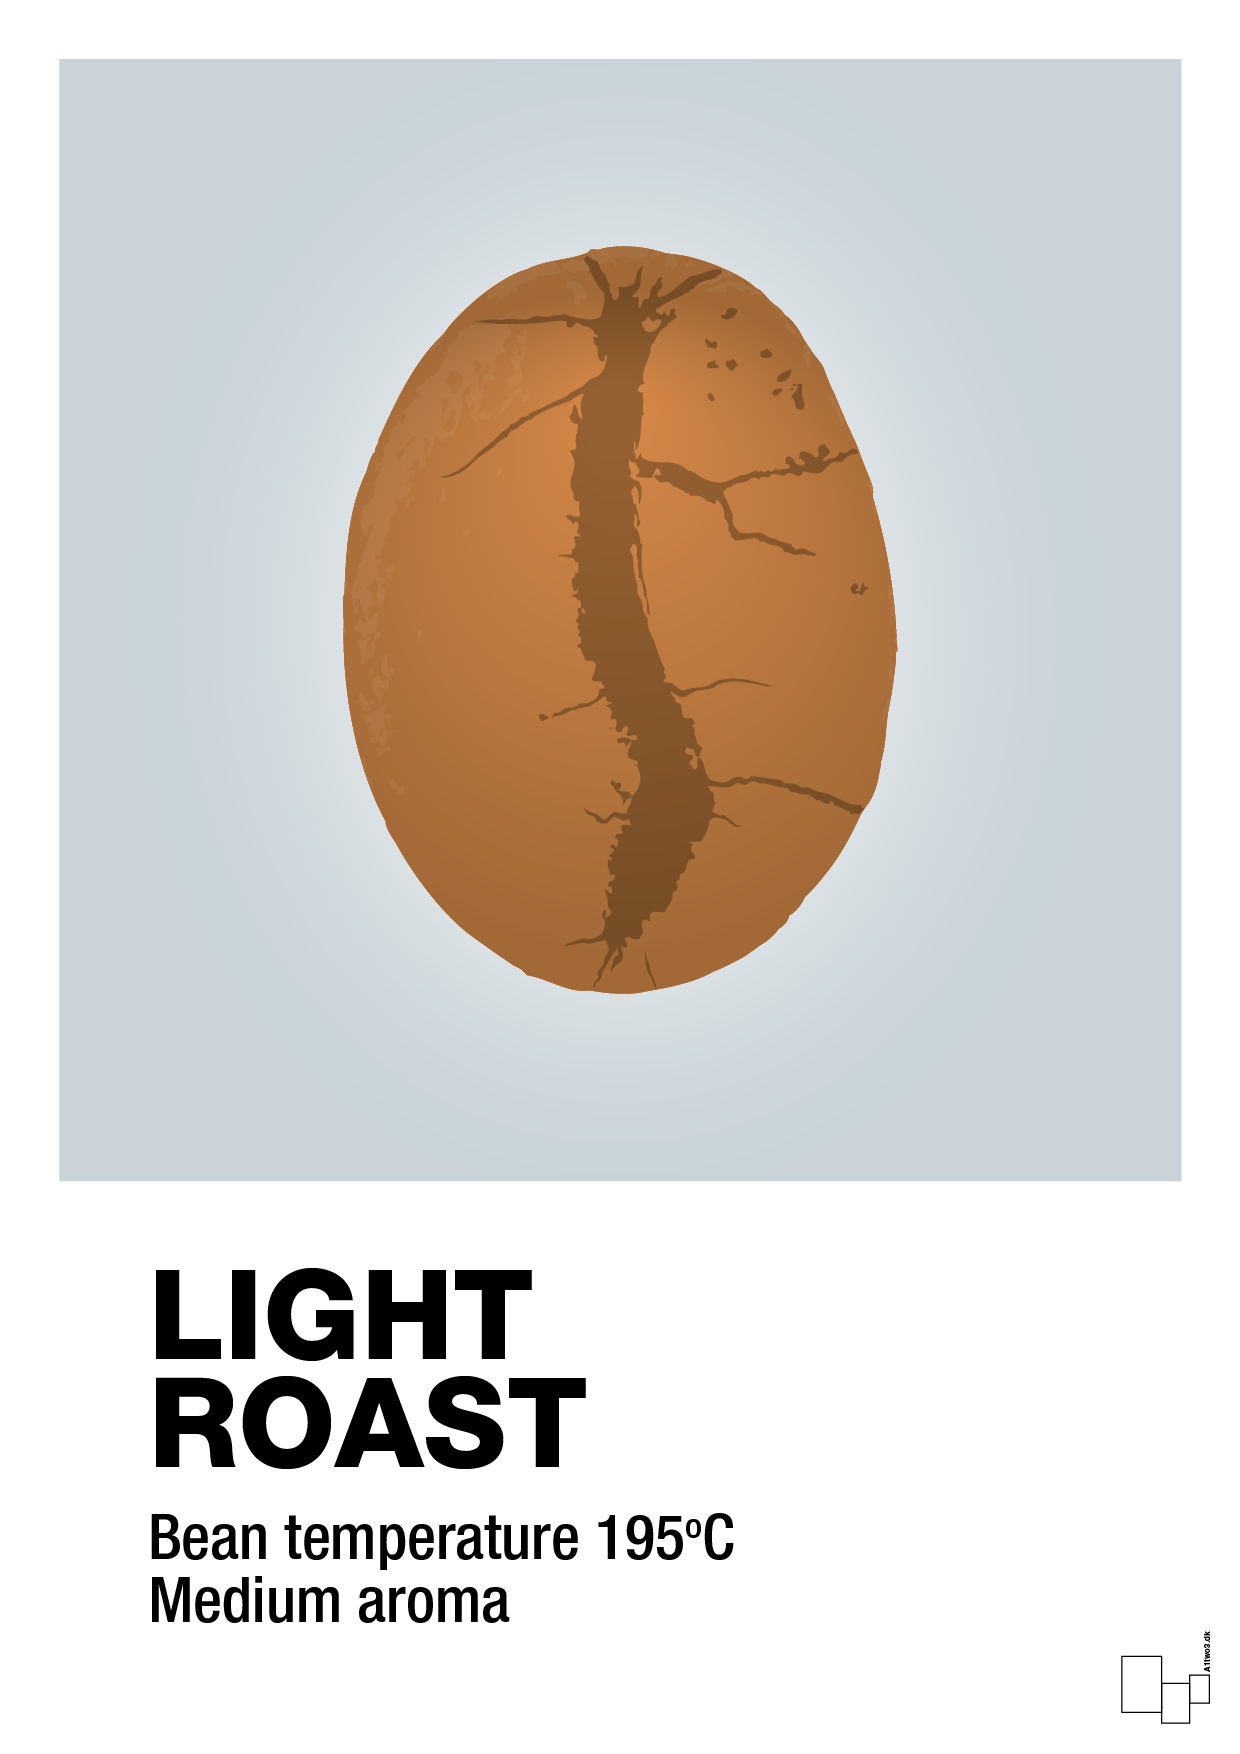 light roast - Plakat med Mad & Drikke i Light Drizzle